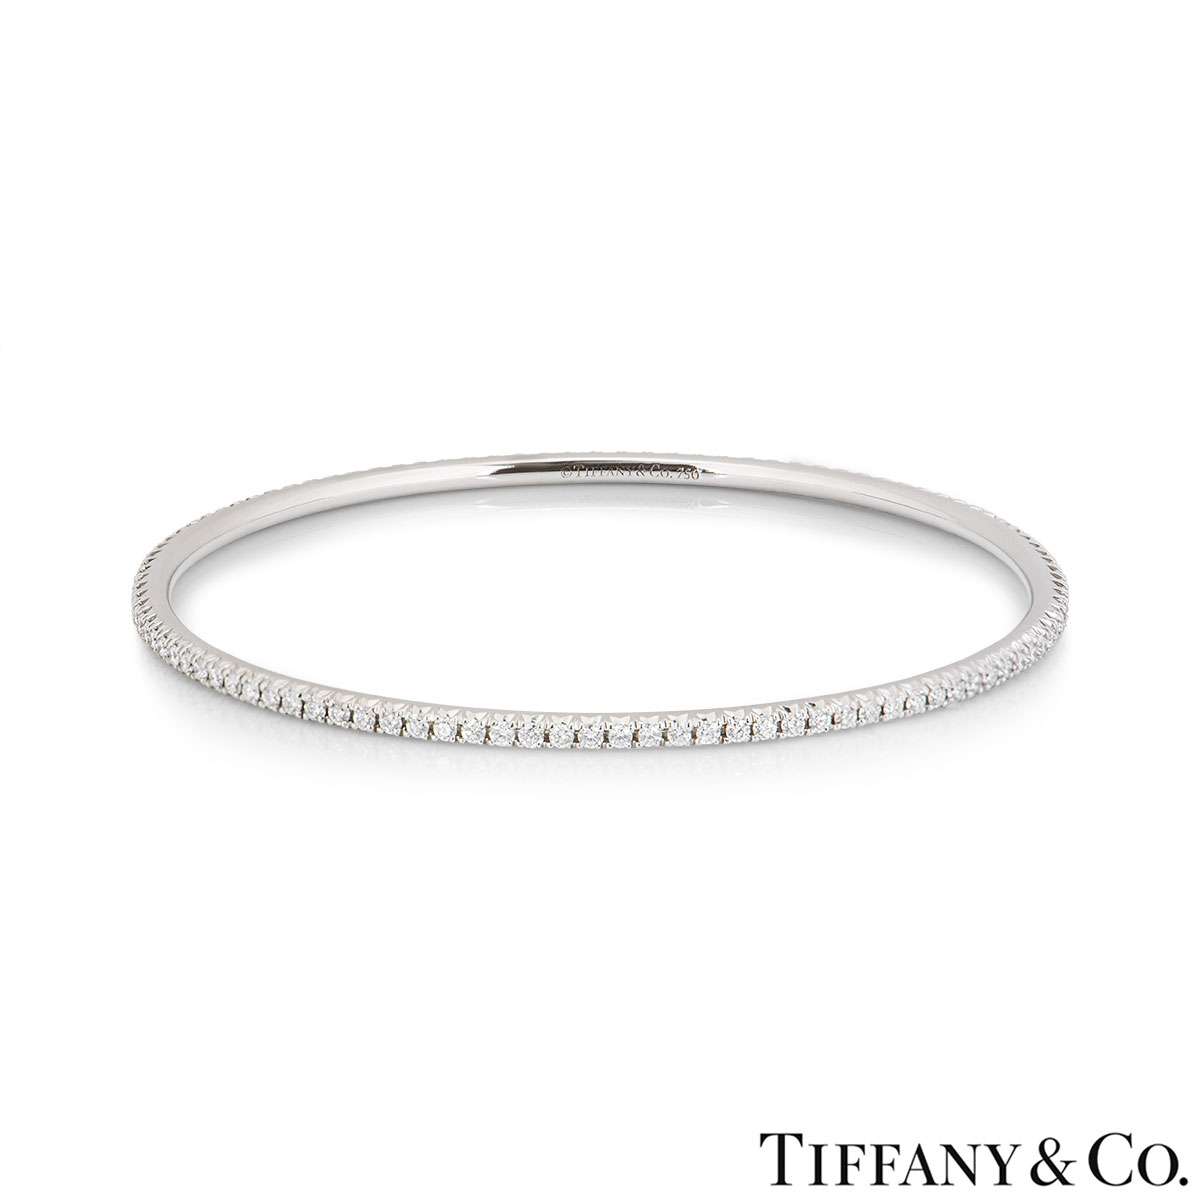 Tiffany & Co. White Gold Diamond Bangle